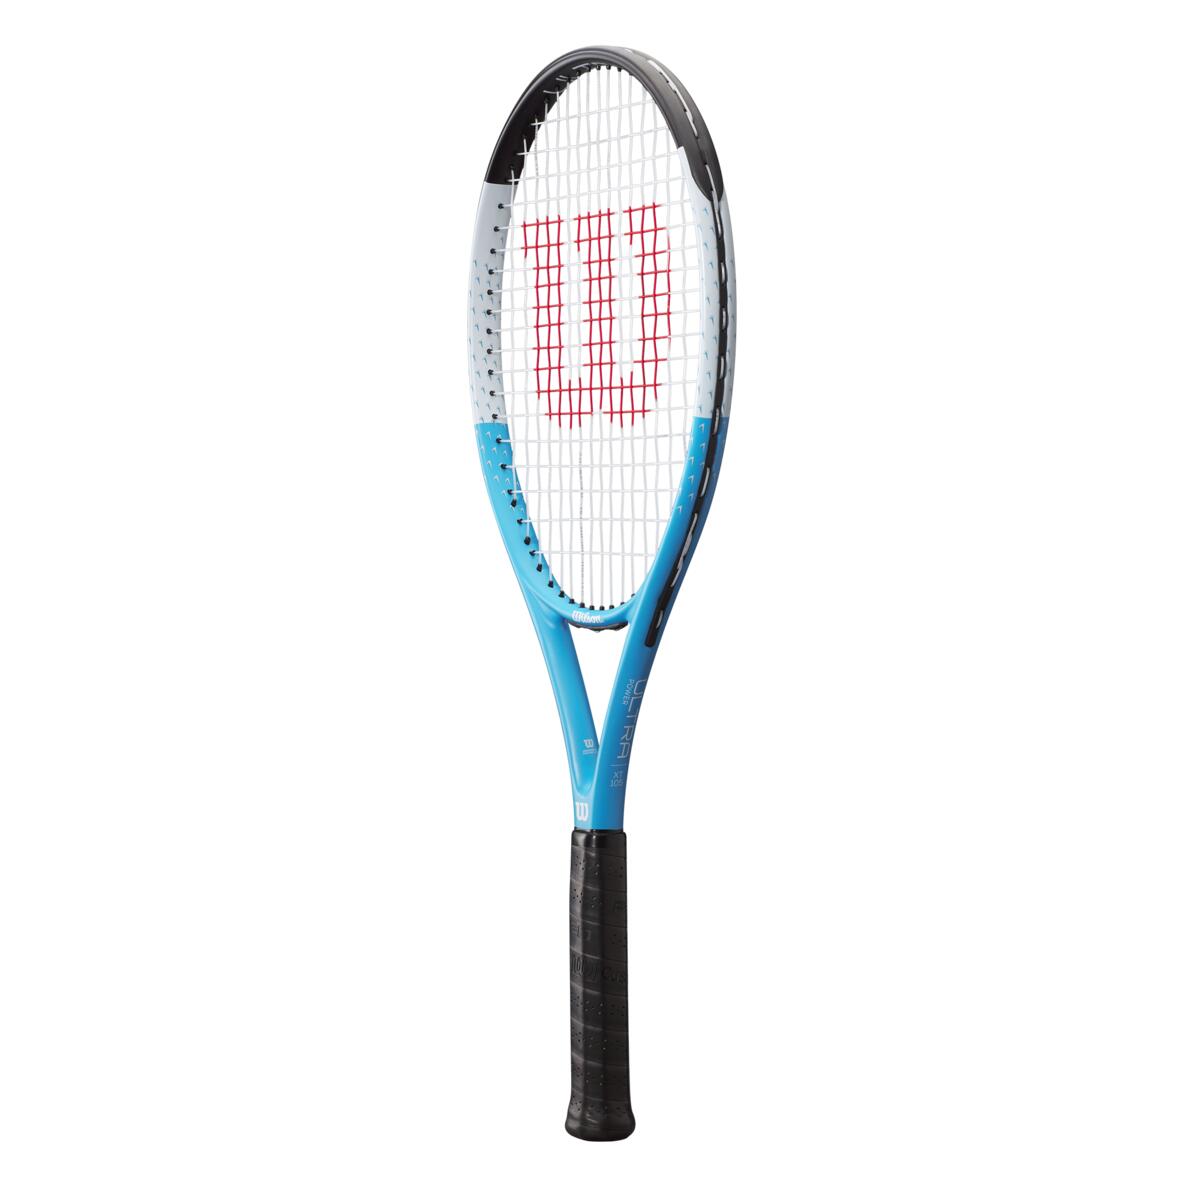 Buy Ultra Power RXT 105 Tennis Racket online - Wilson Australia